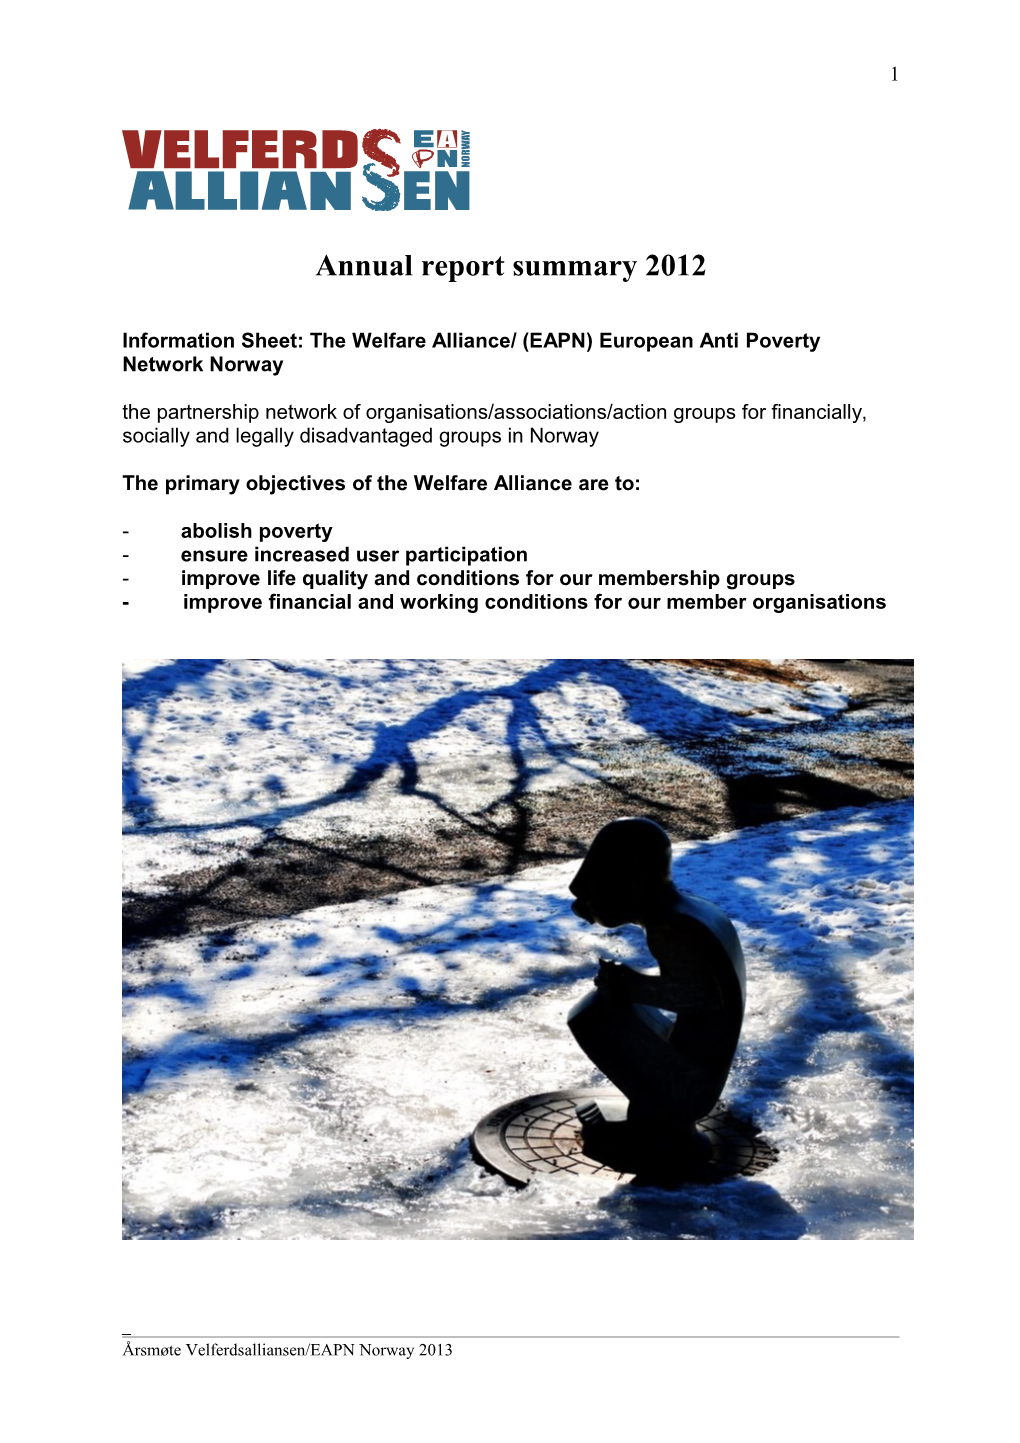 Annual Report Summary 2012